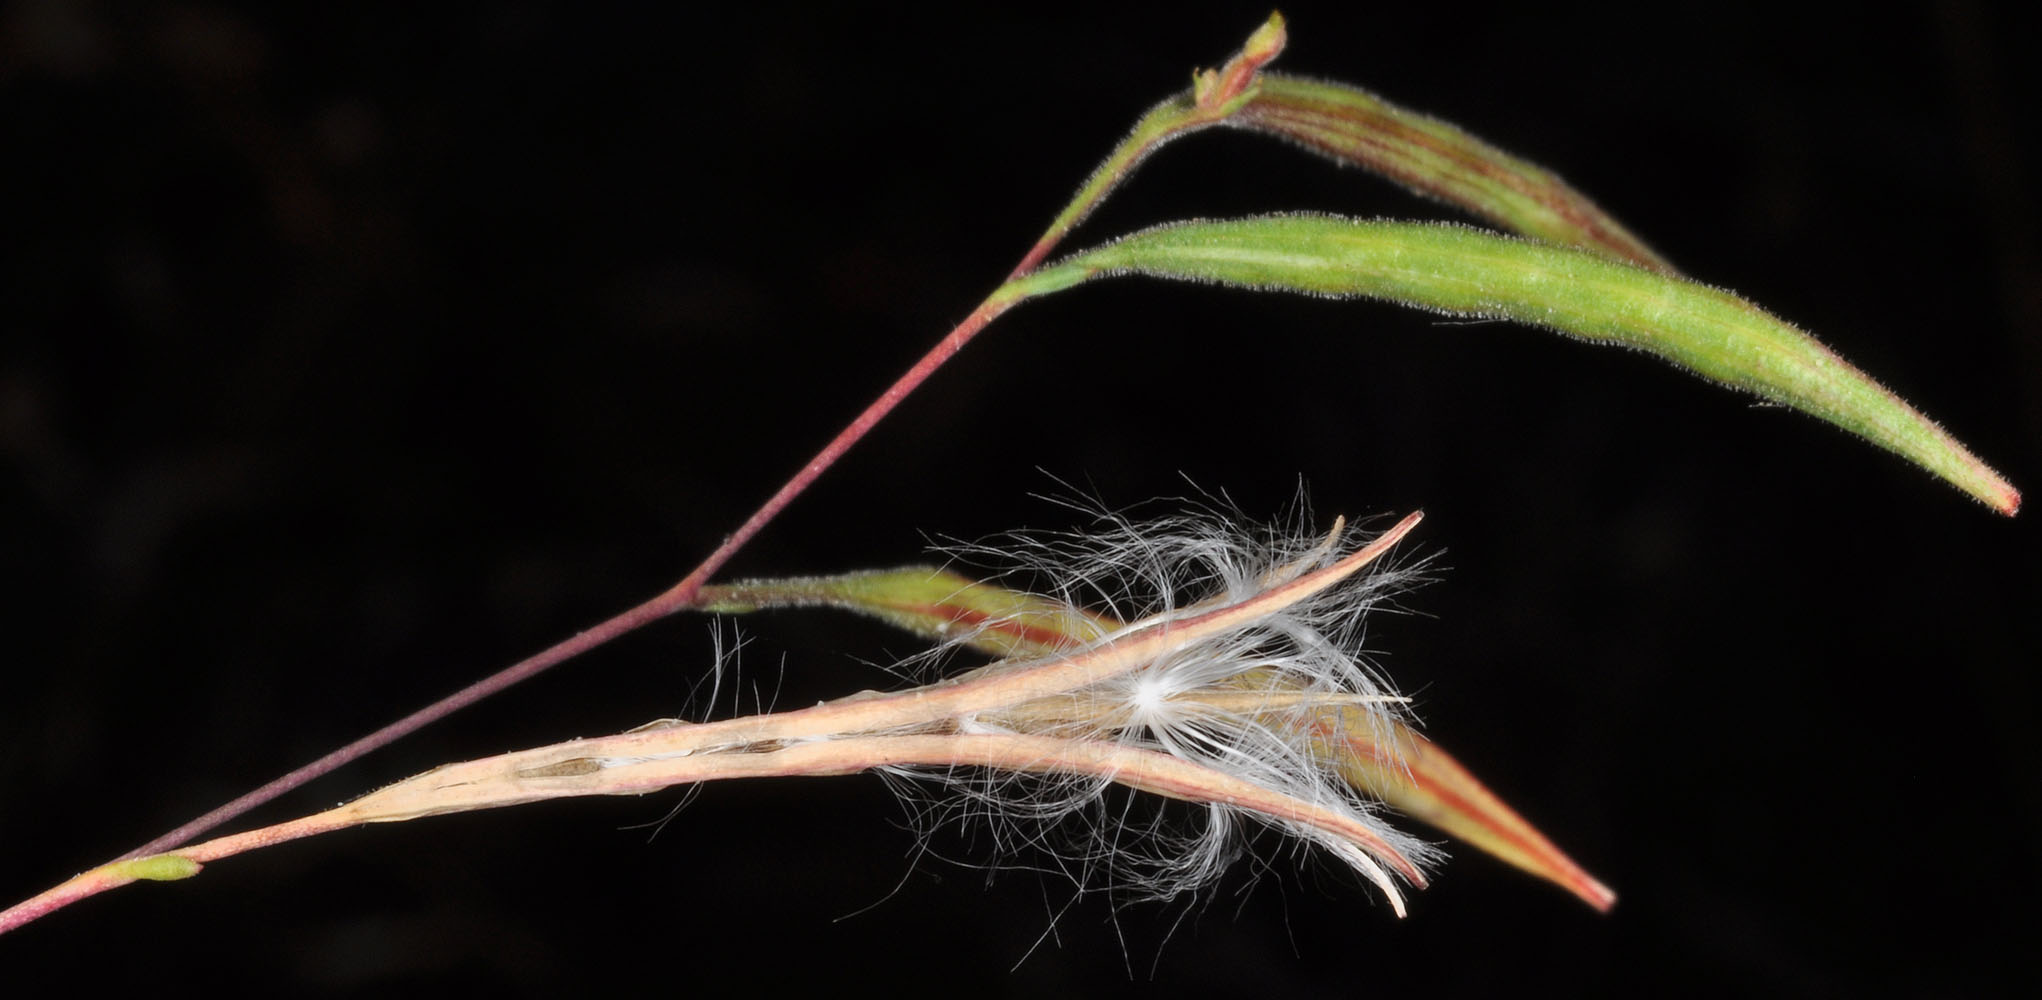 Flora of Eastern Washington Image: Epilobium brachycarpum